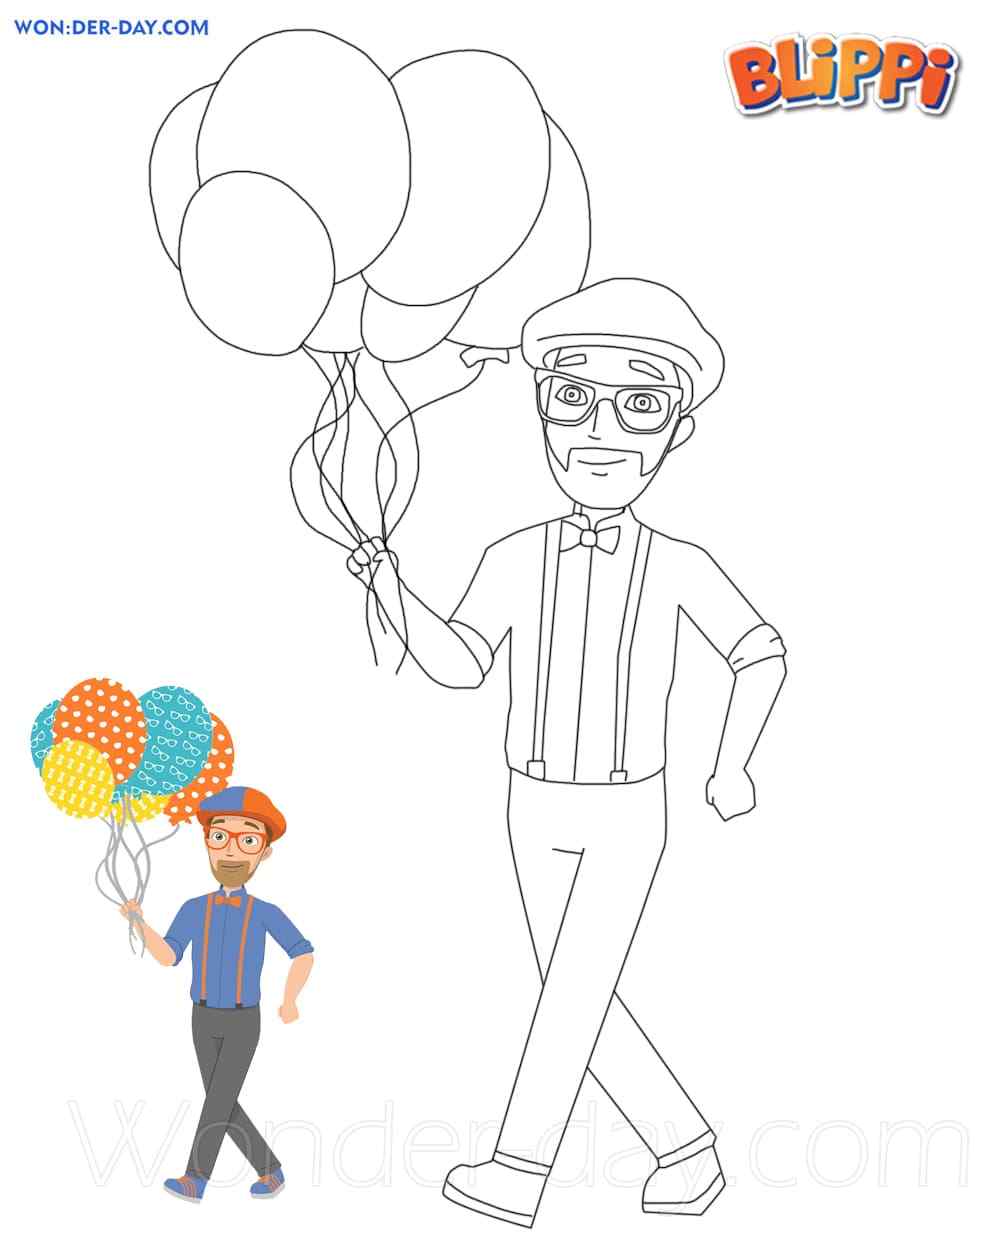 Blippi With Balloons